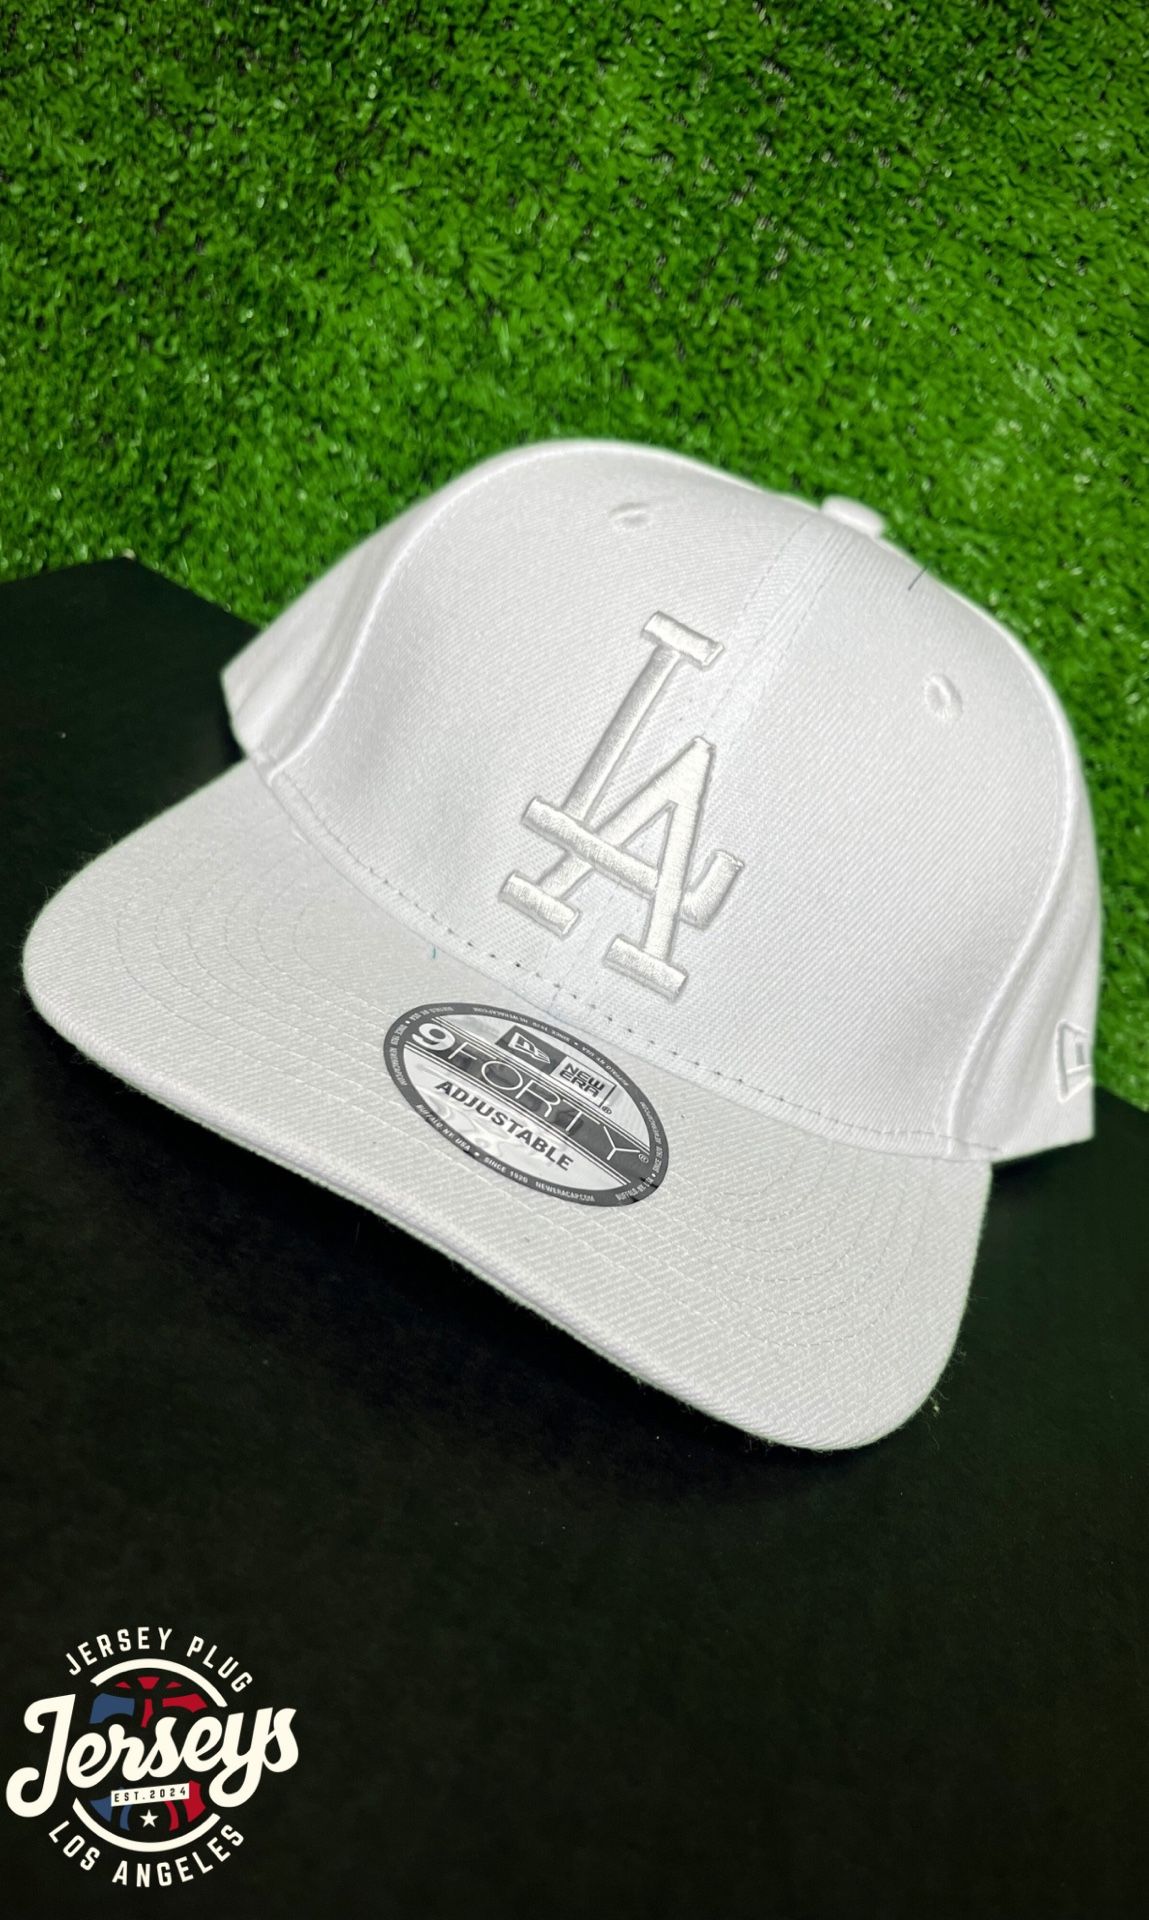 Los Angeles Dodgers New Era Strapback 